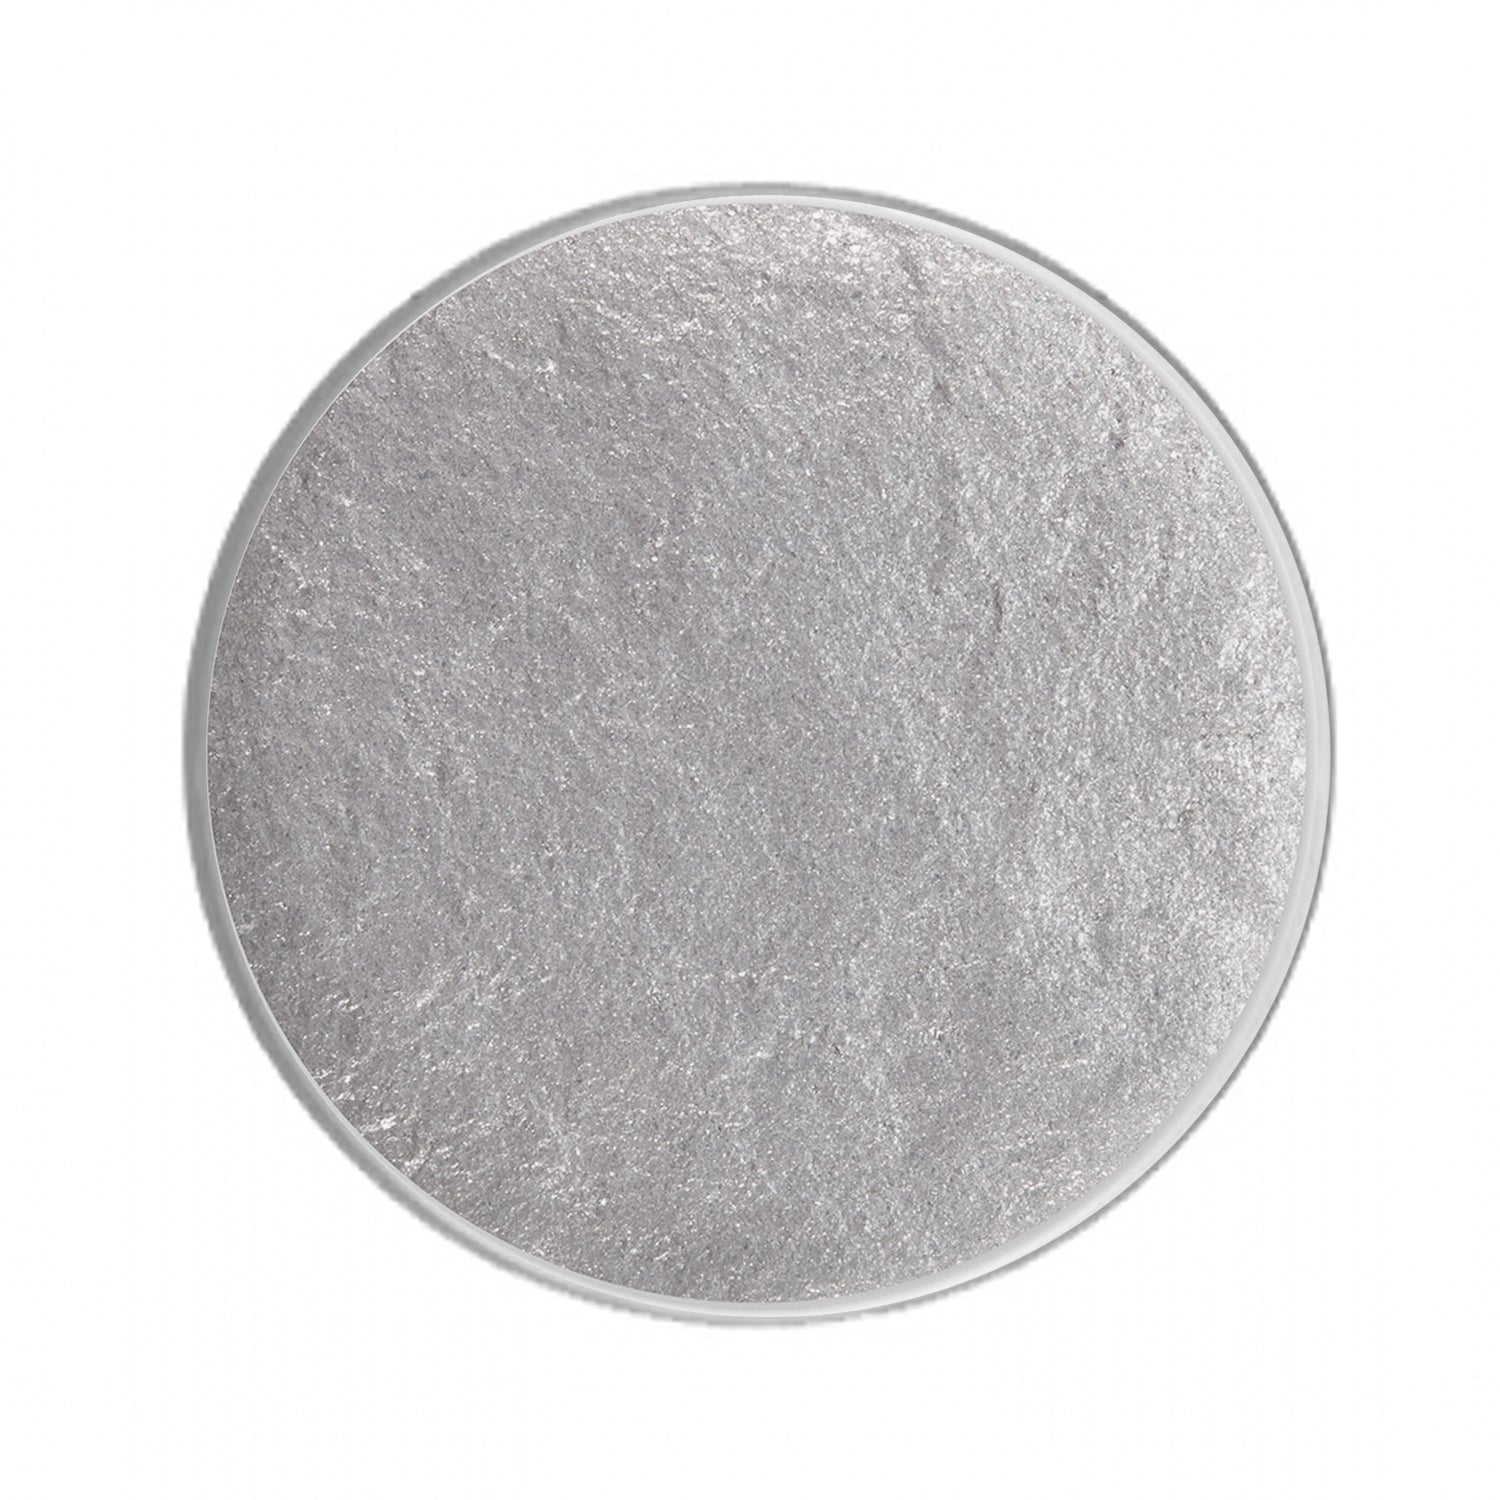 Kryolan Aquacolor Silver Face Paints - Metallic Silver (30 ml)